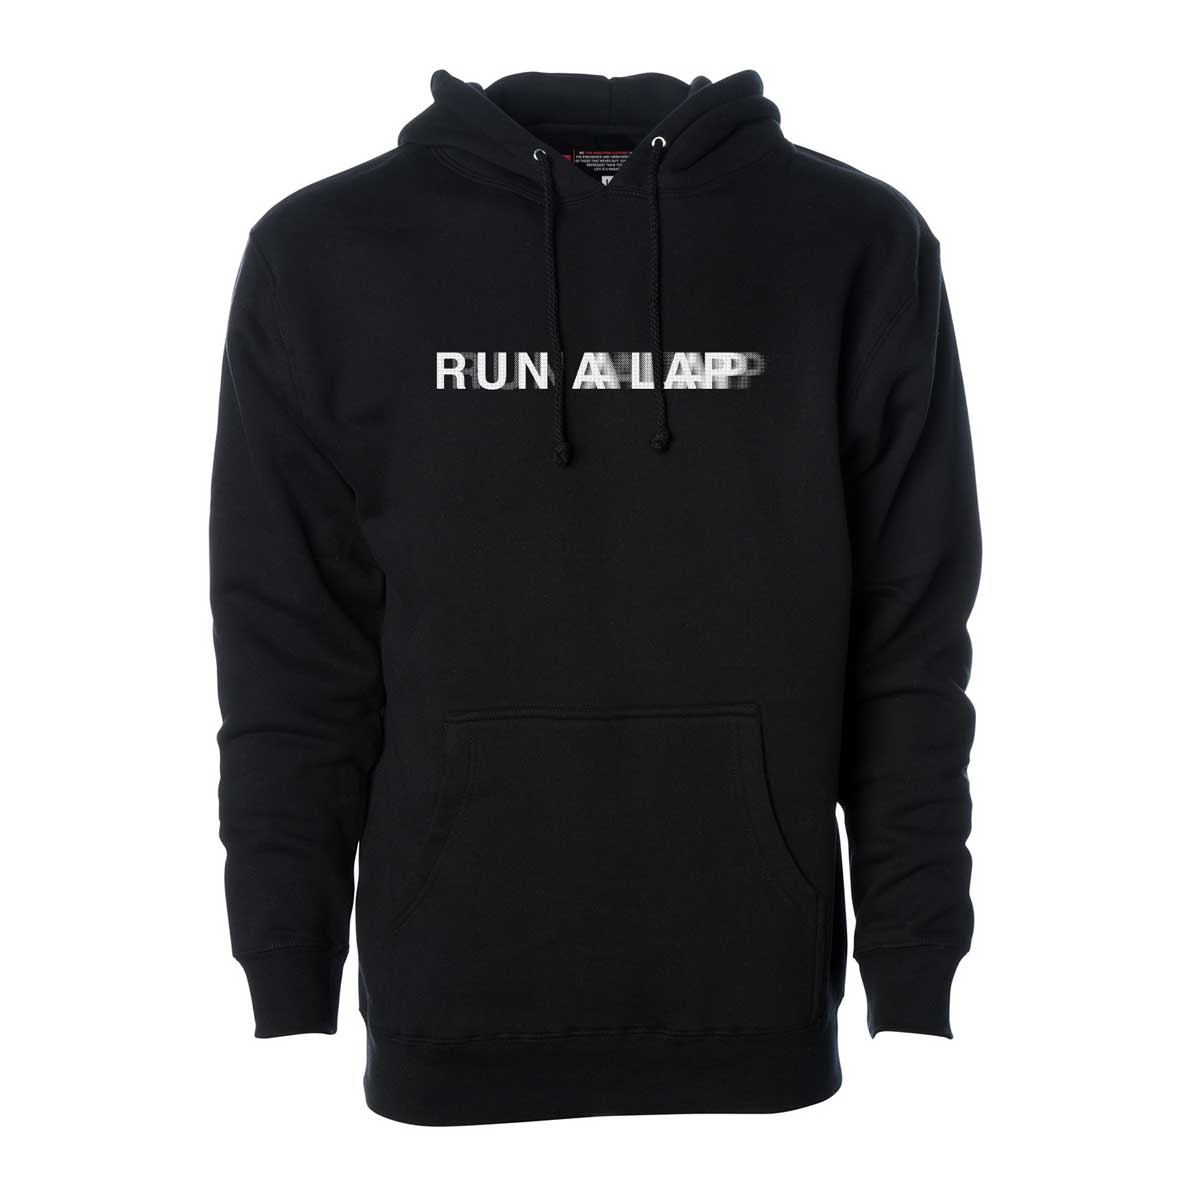 Run A Lap Blurred Hoodie - Black/White – The Marathon Clothing